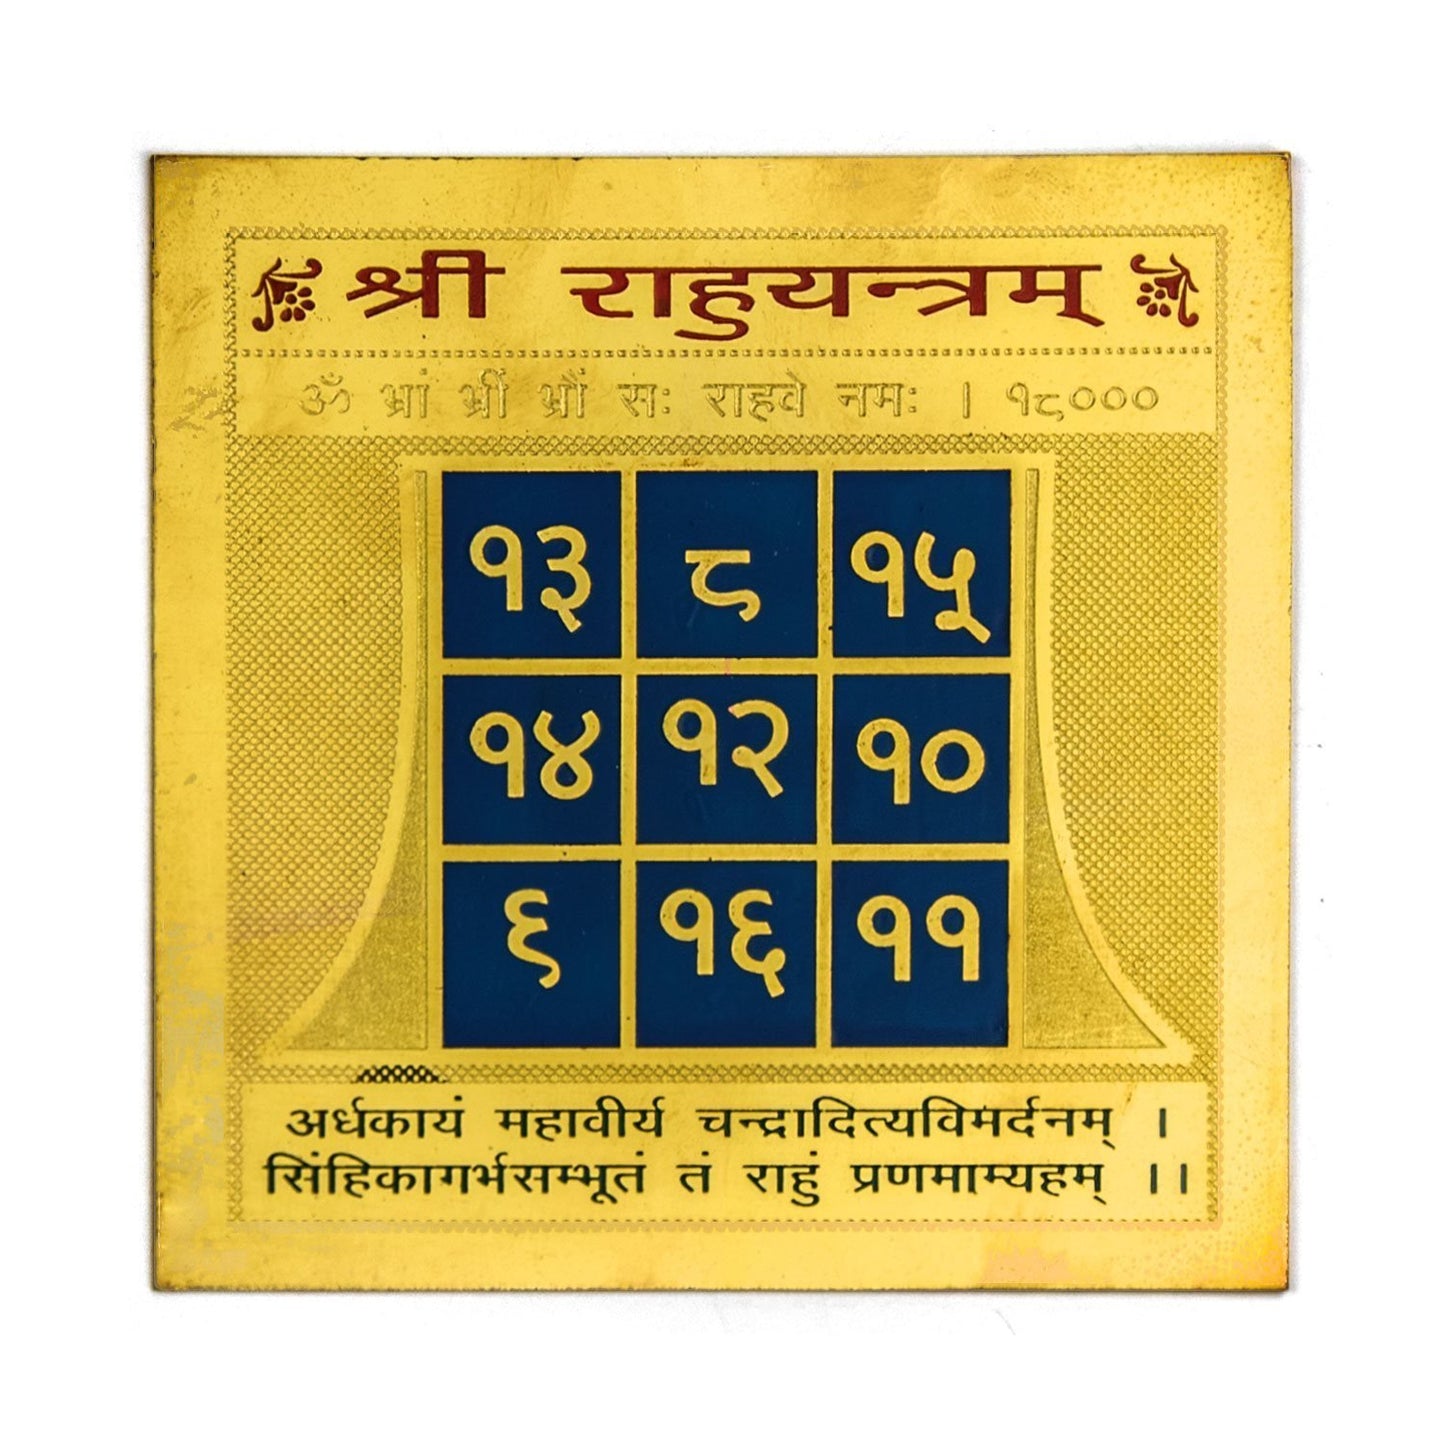 Pujahome Original Shri Rahu Yantra - 3.25X3.25 Inch Gold Polished Spiritual and Vedic Astrology Yantra